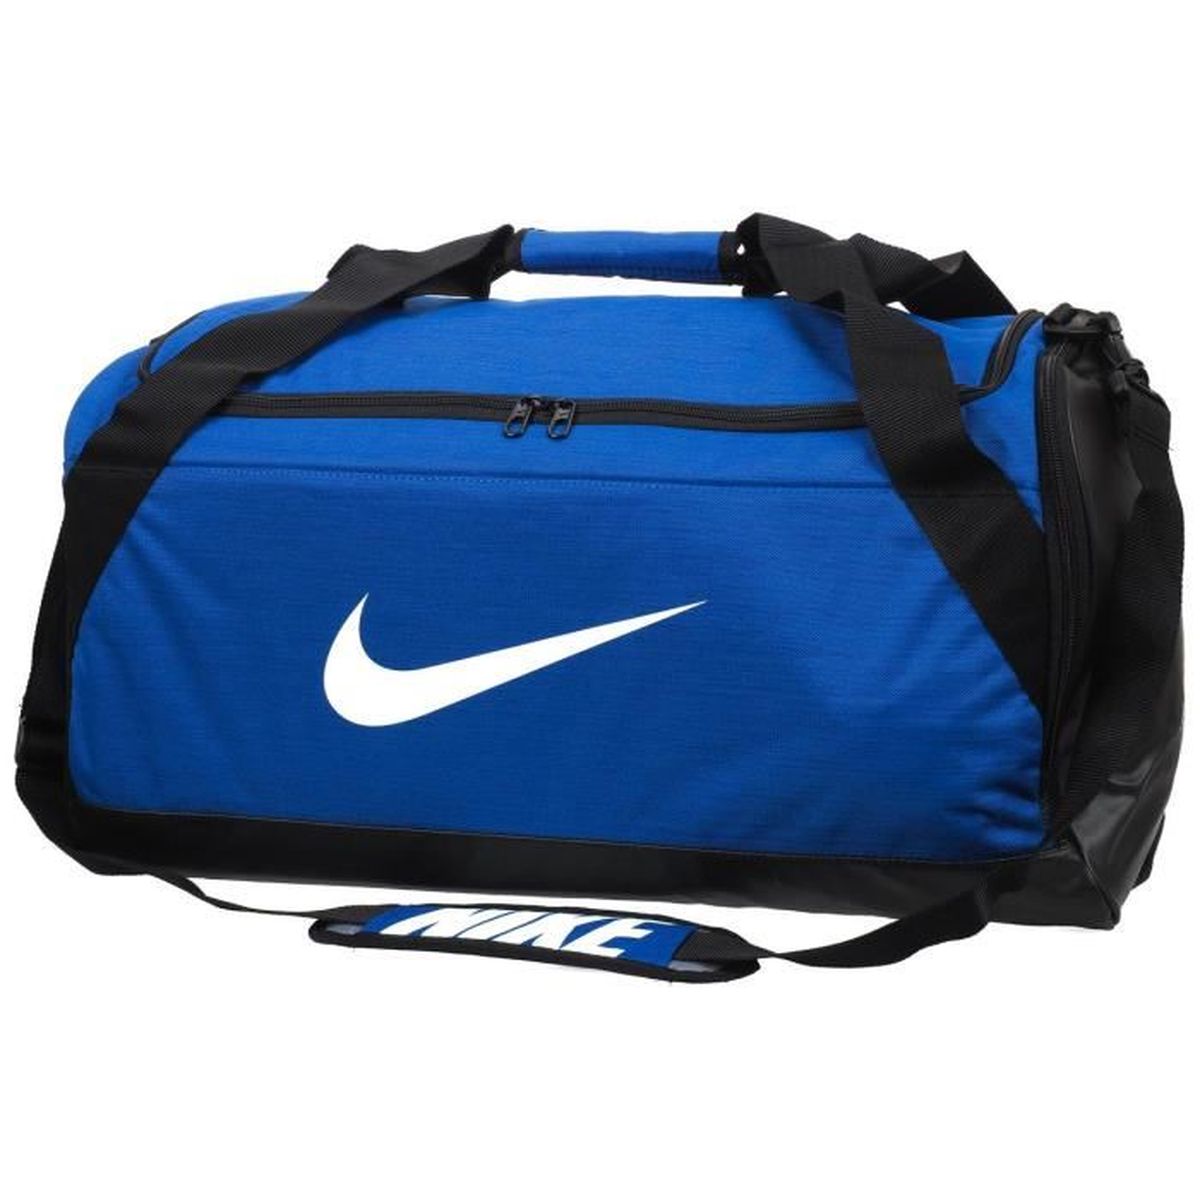 Sac De Sport Nike Bleu Wholesale, OFF